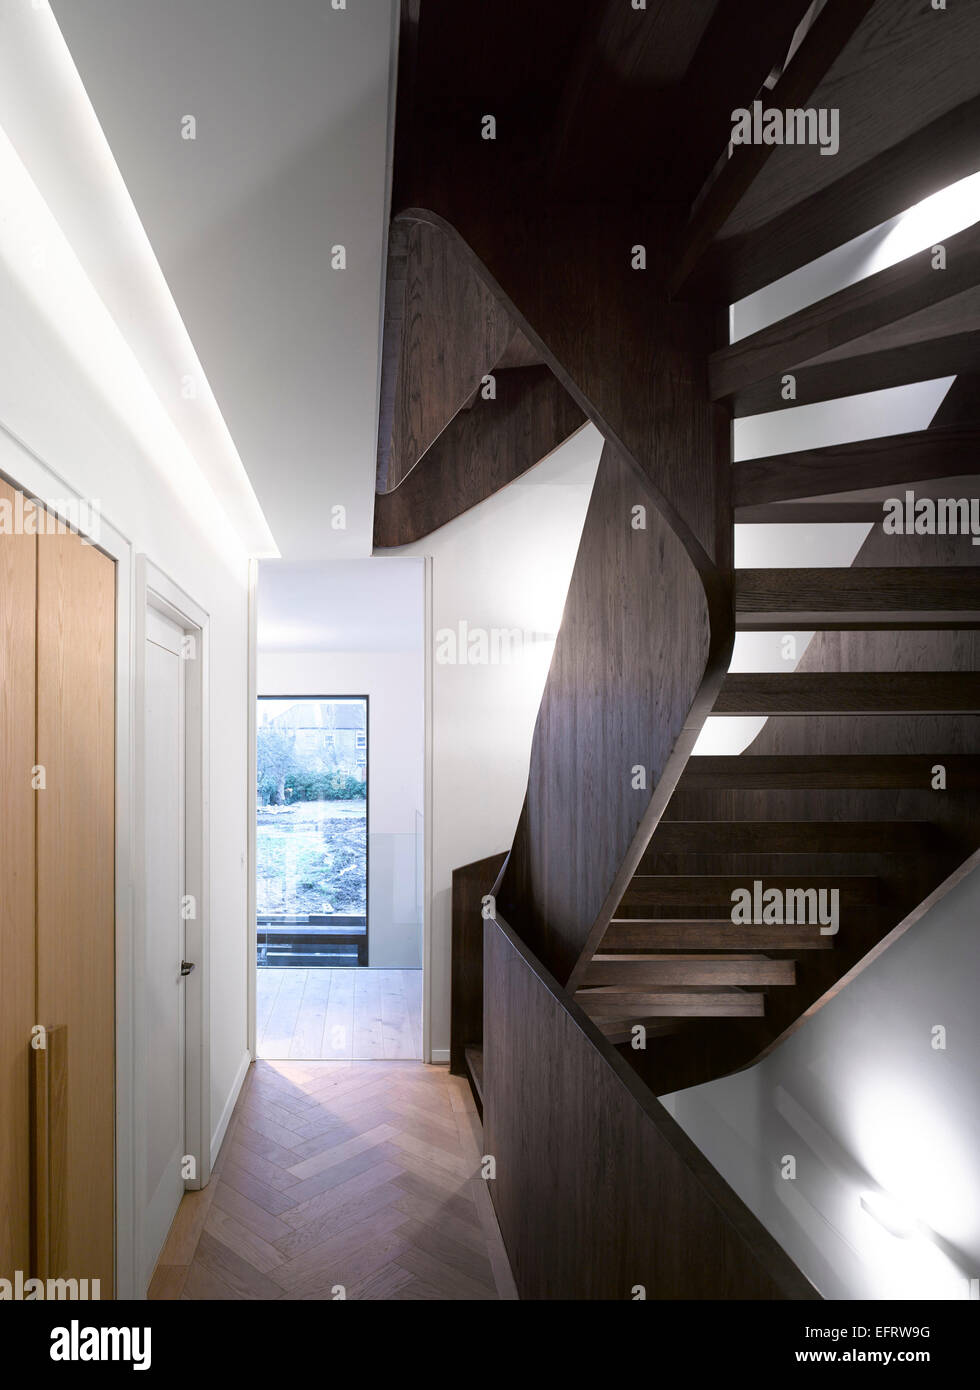 St Johns' Orchard, London, UK. Architect: John Smart Architects, 2013. Staircase. Stock Photo